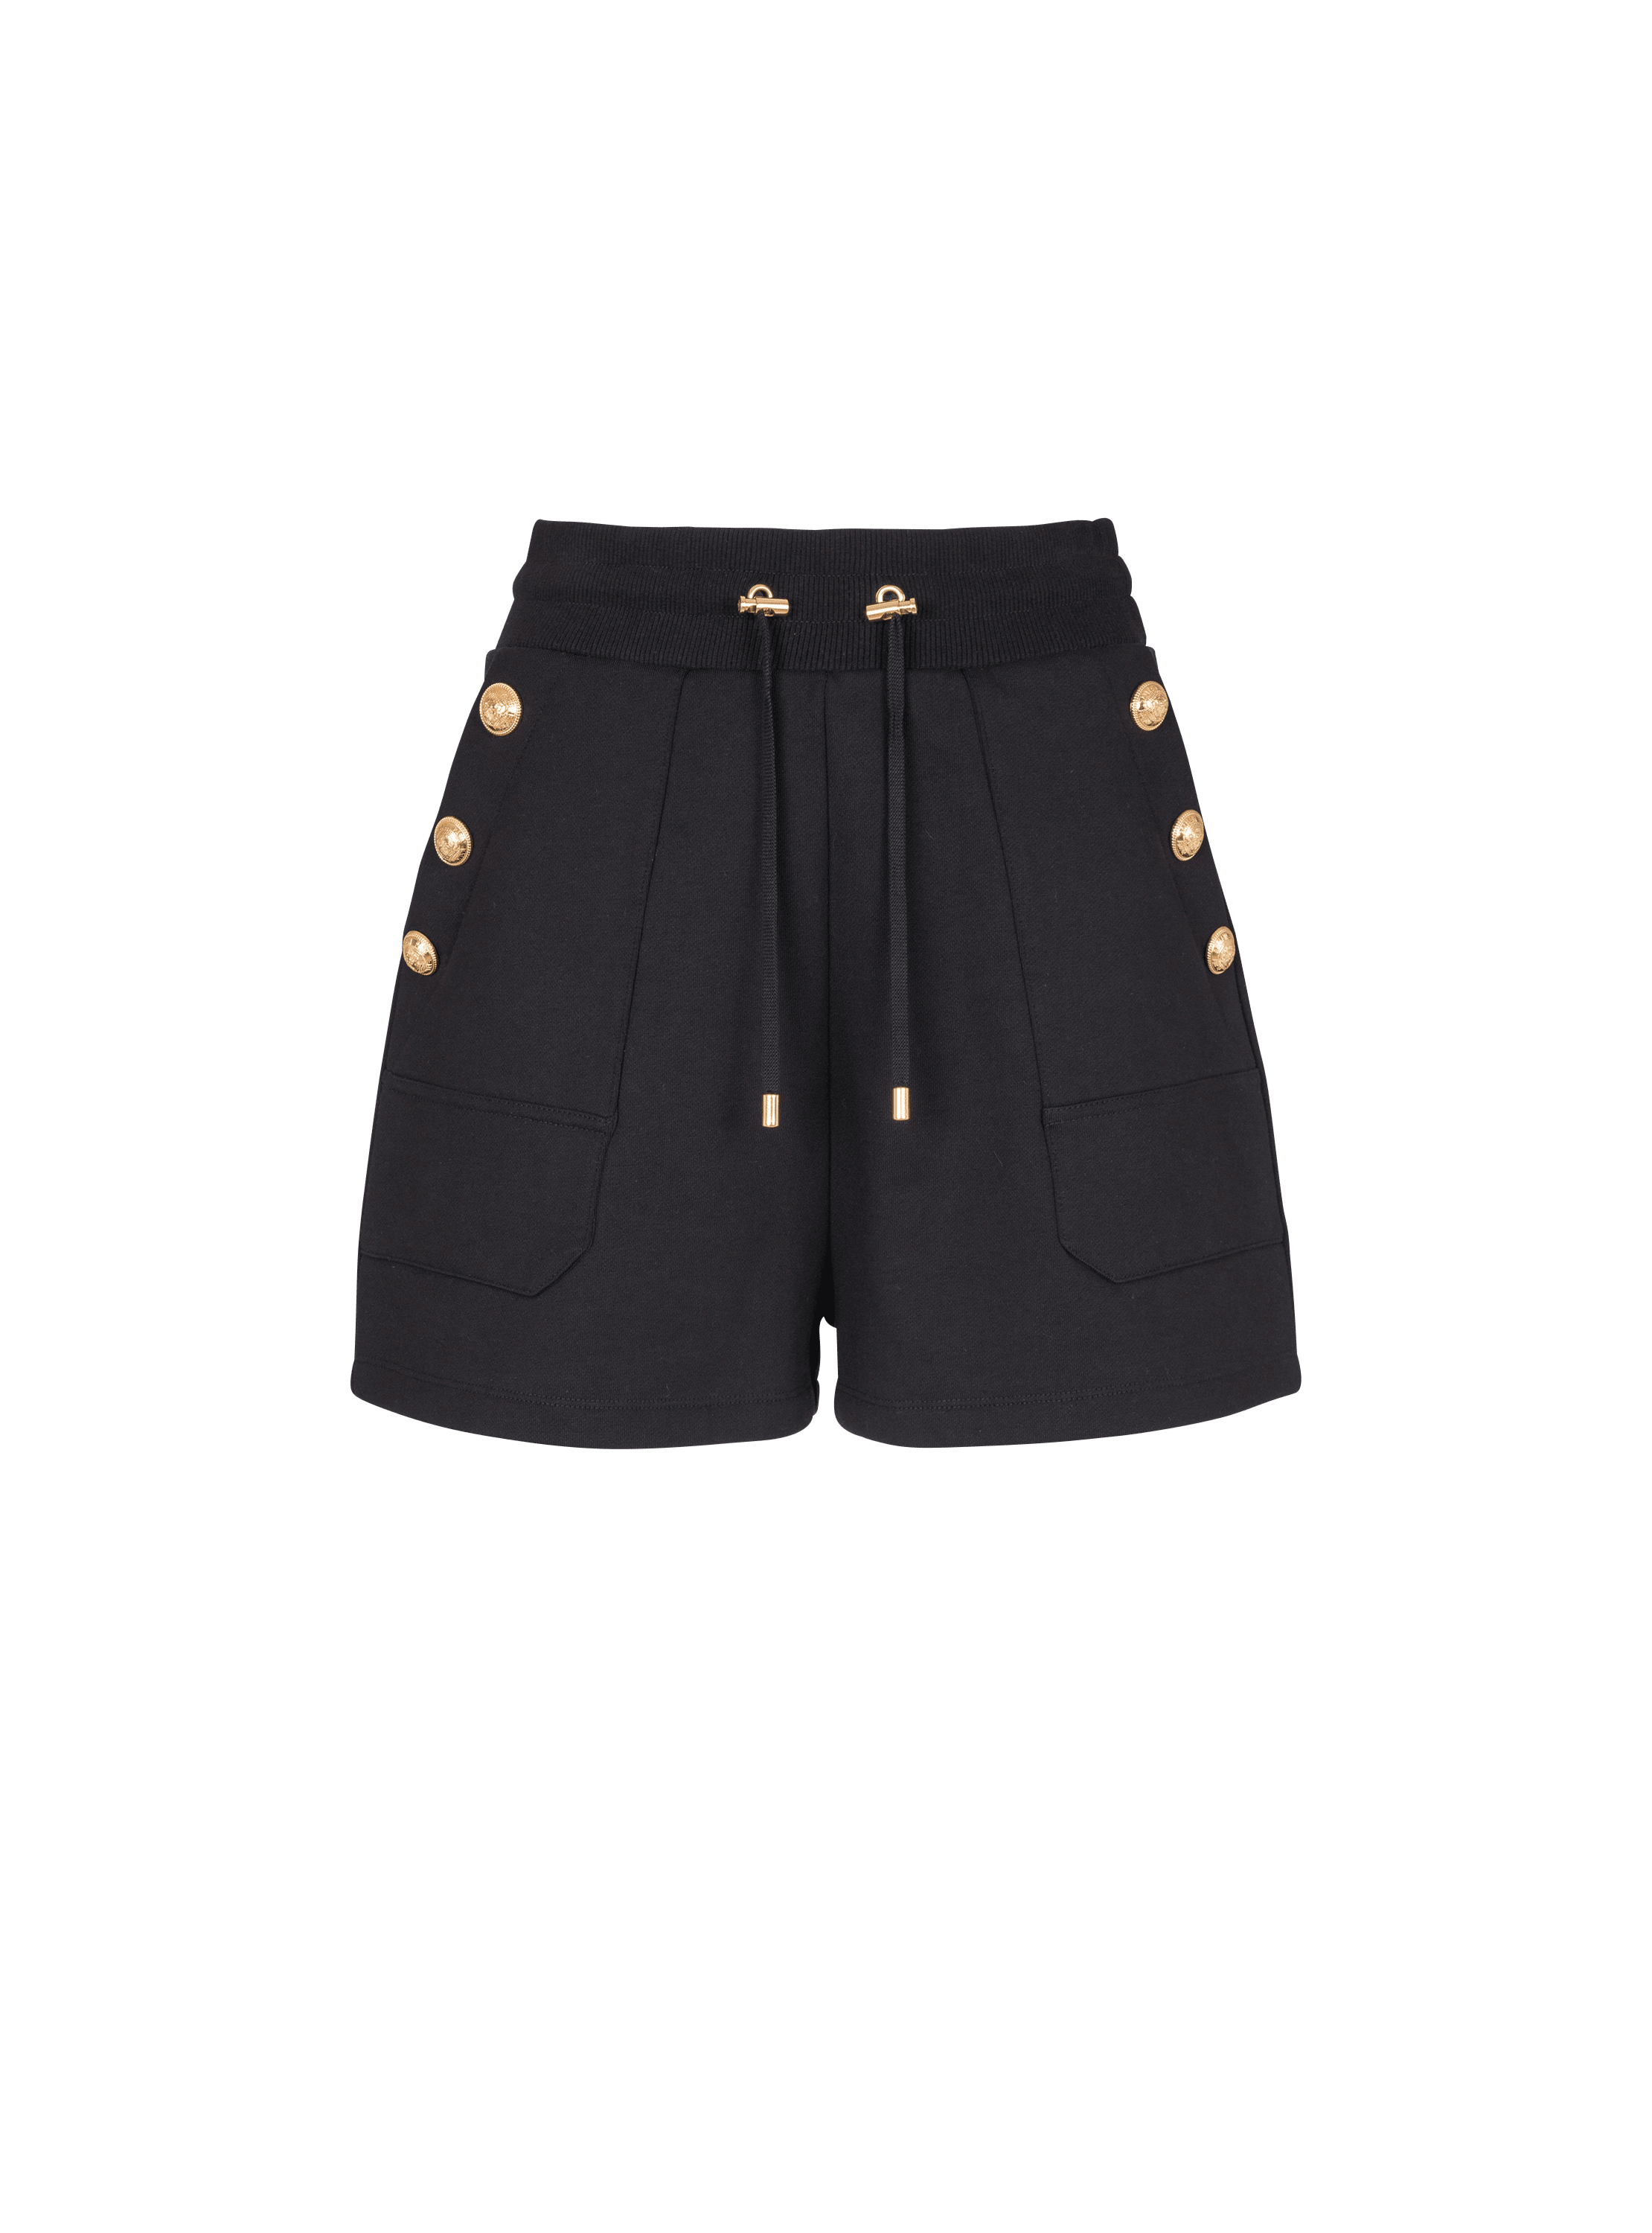 6-button knit shorts, black, hi-res